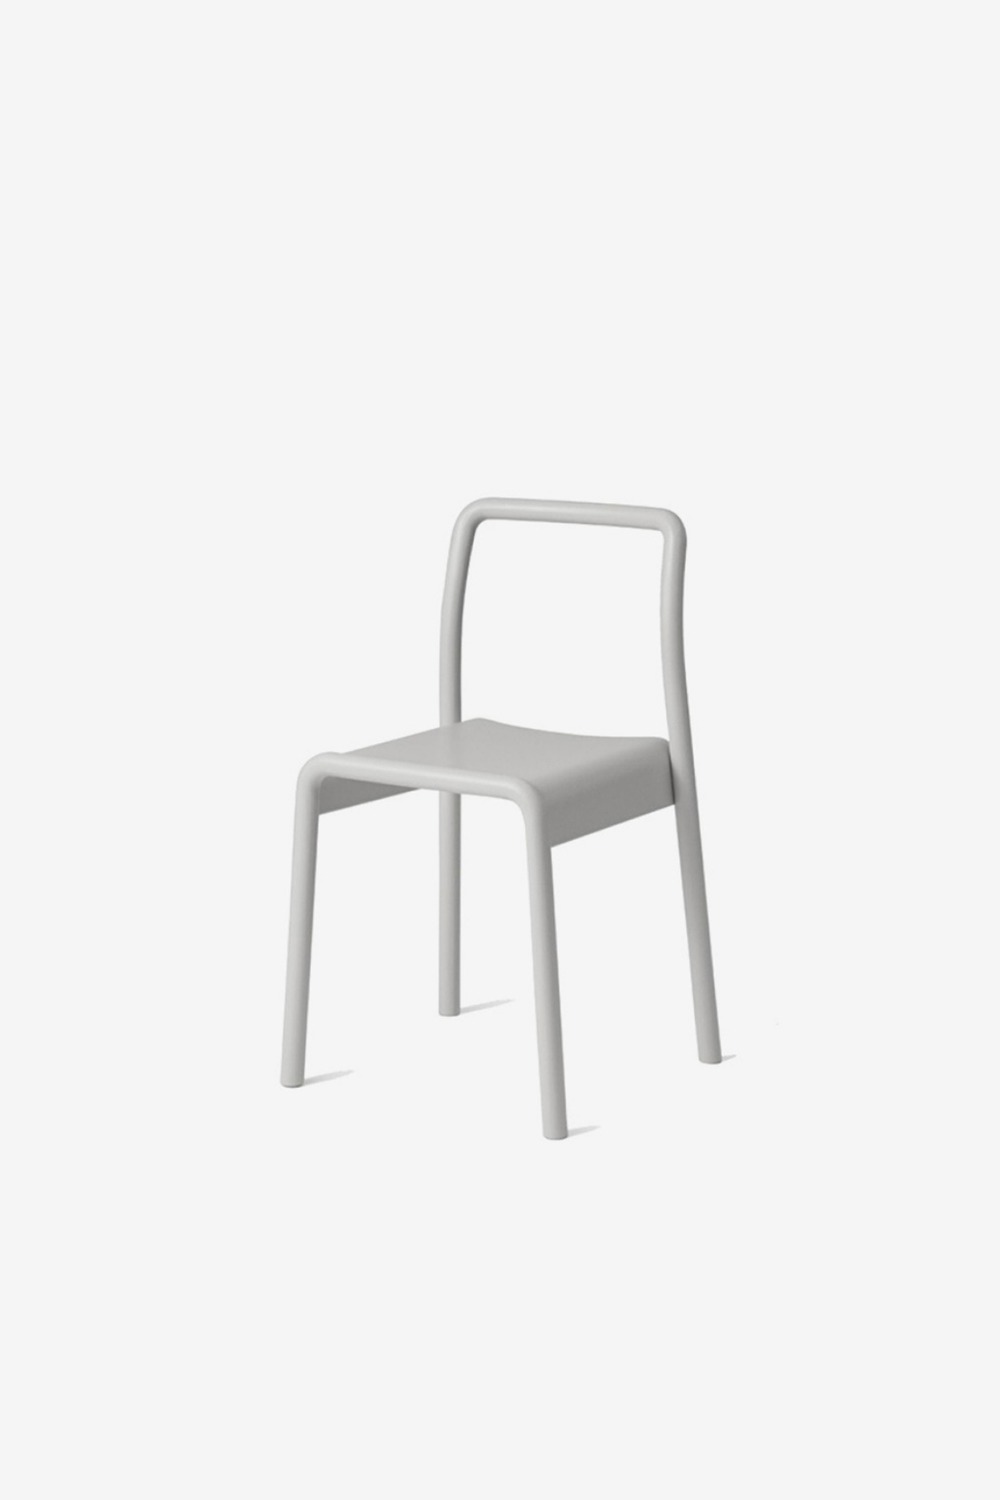 [TAKT] Tool Chair (Light grey)